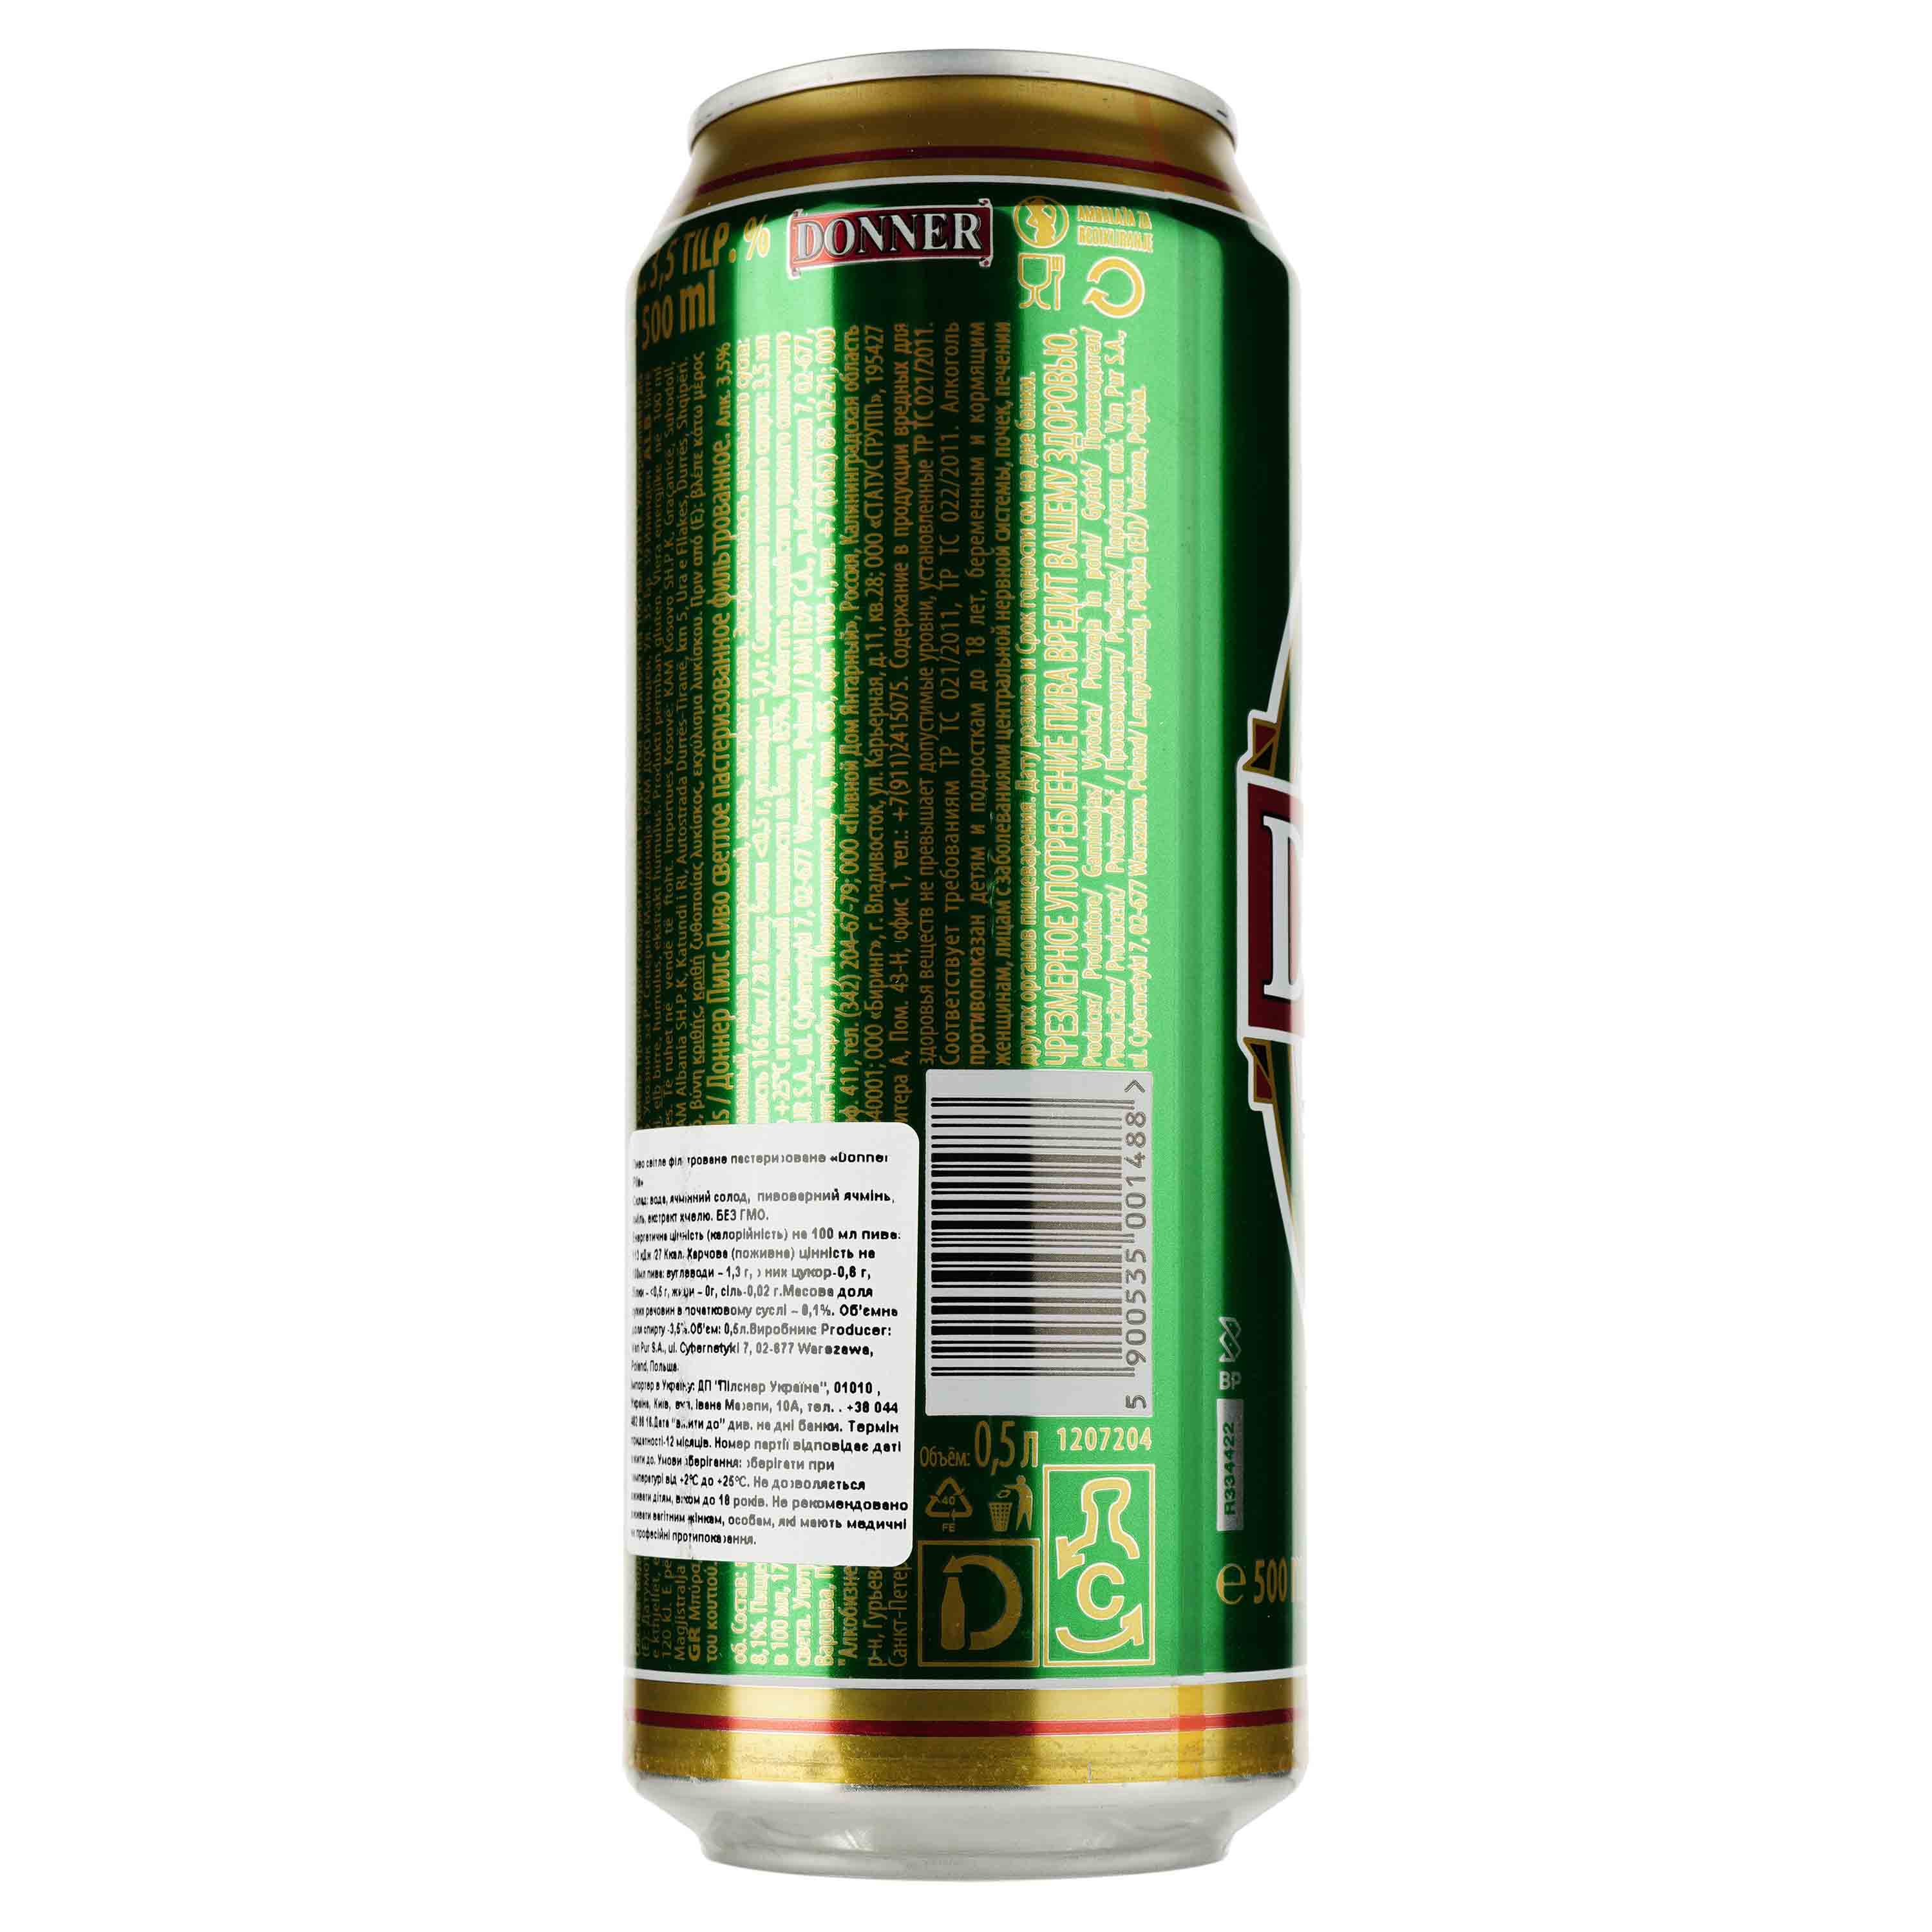 Пиво Donner Pils светлое, 3.5%, ж/б, 0.5 л - фото 2